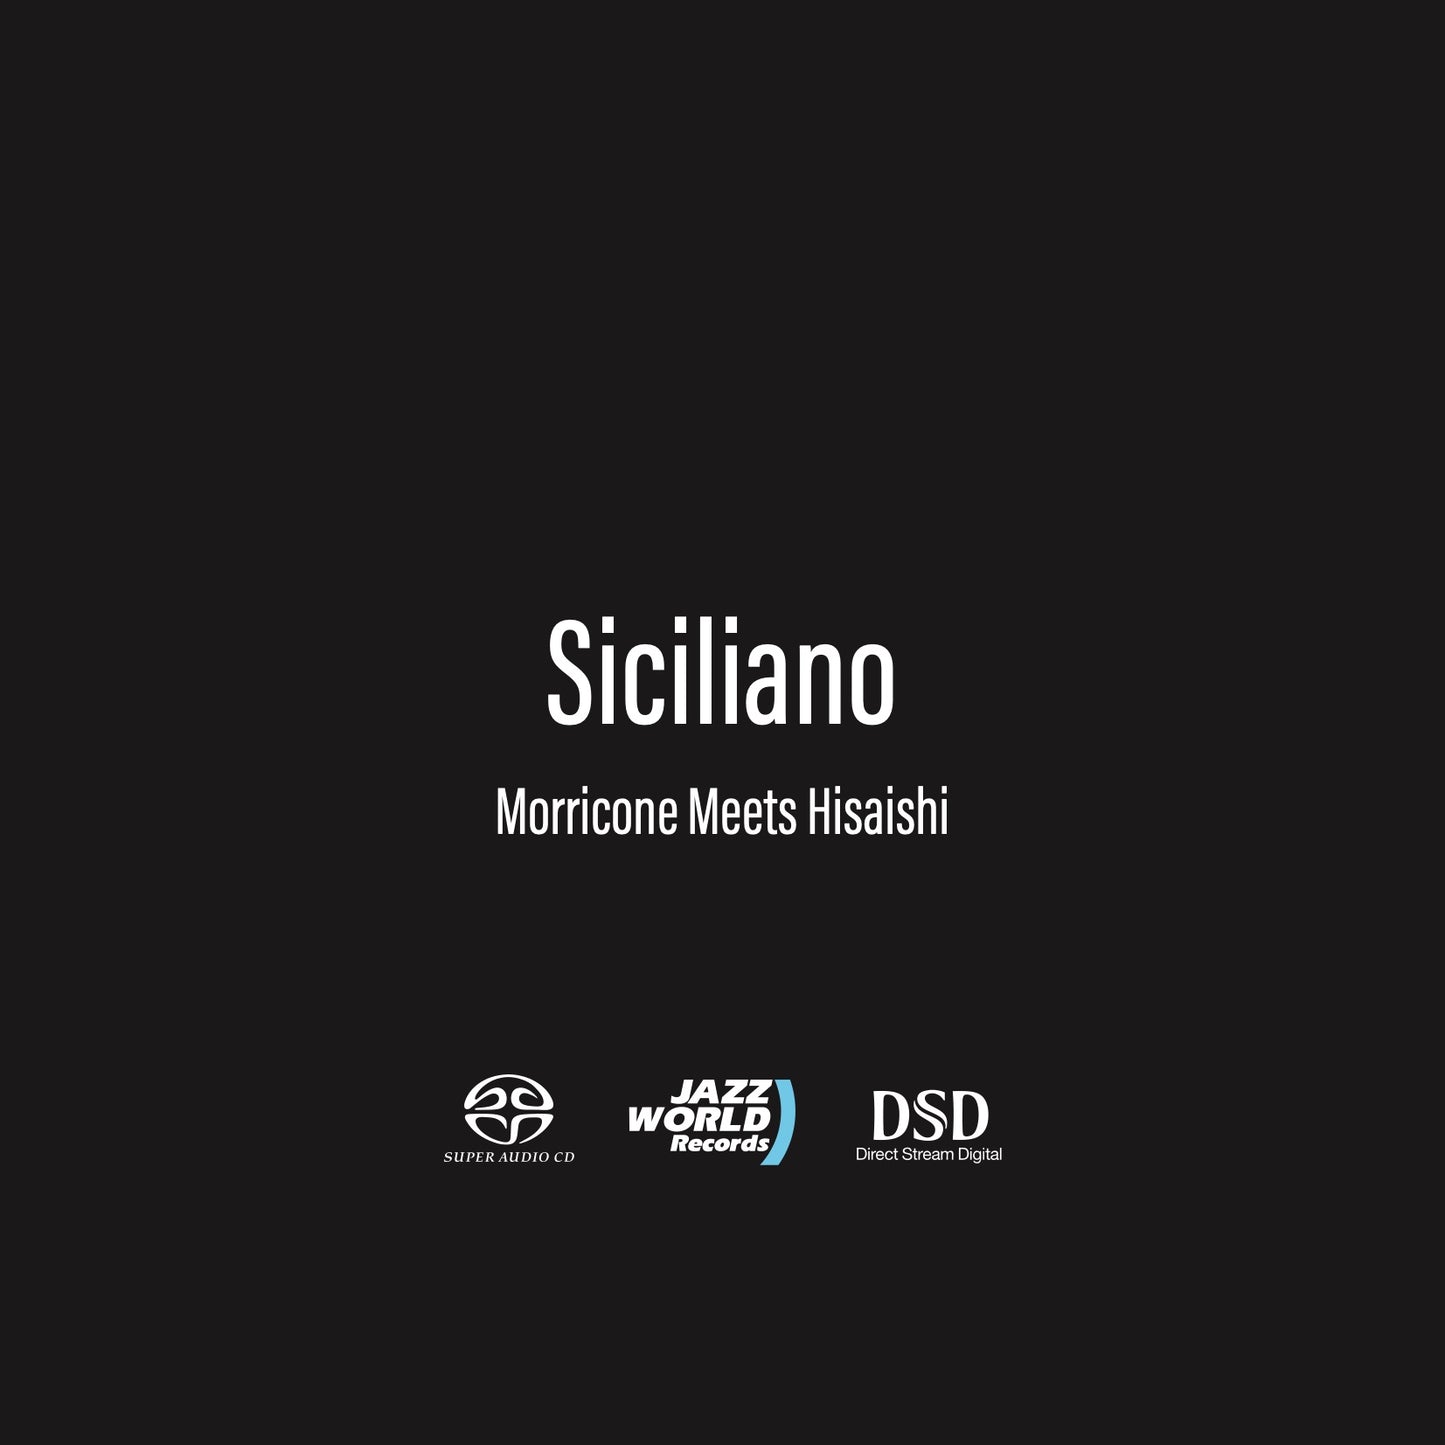 Siciliano - Hybird SACD/CD